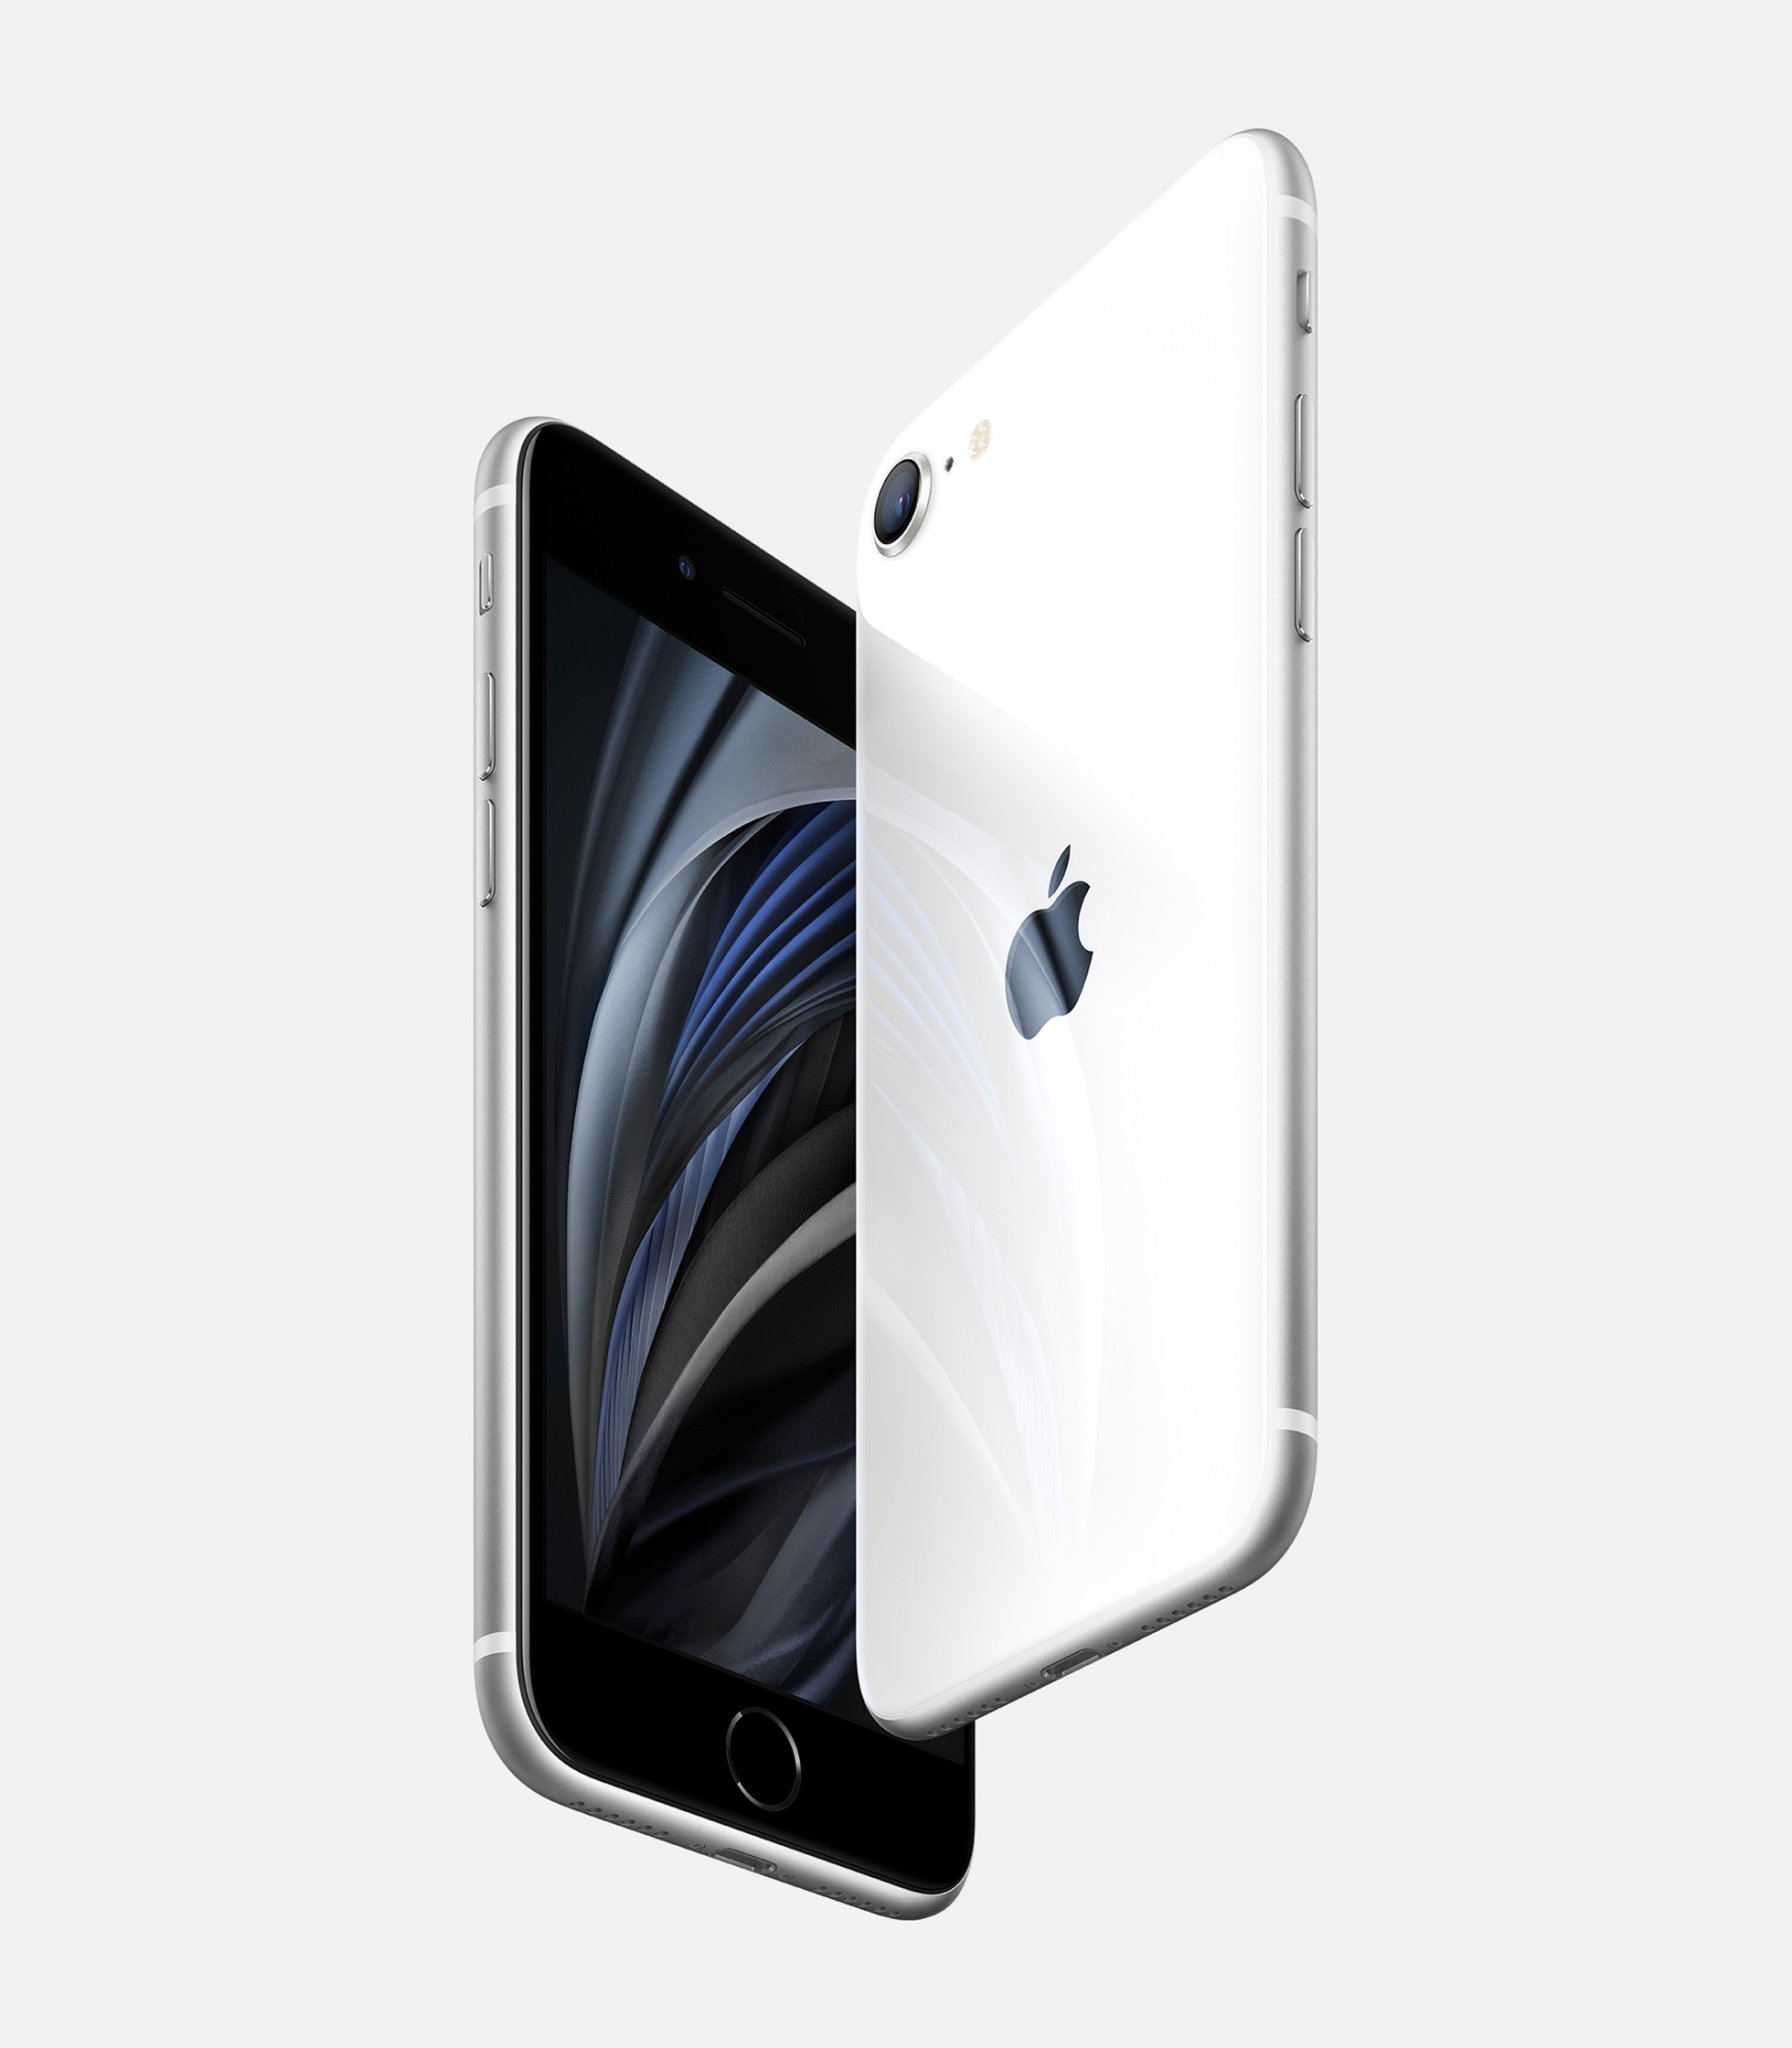 4973115_Apple_new-iphone-se-white_04152020_big.jpg.large_2x.jpg